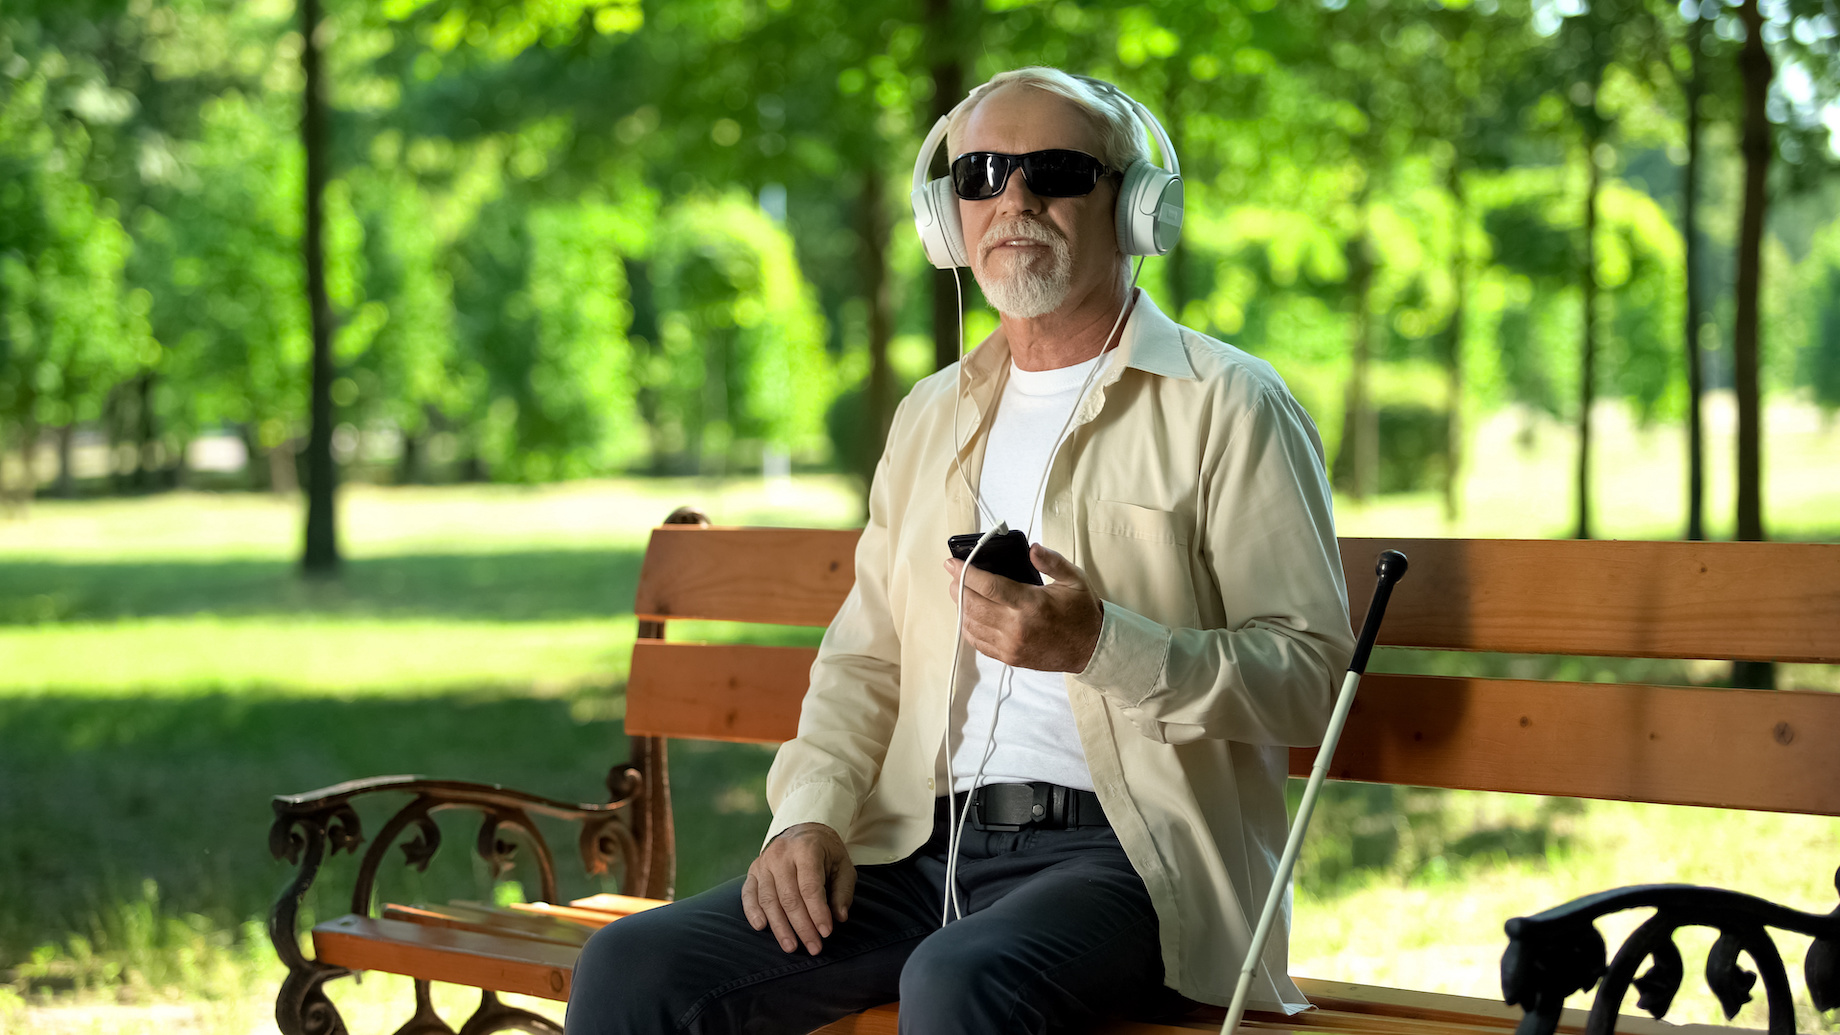 Blind old man wearing earphones listening audiobook, voice message in cellphone